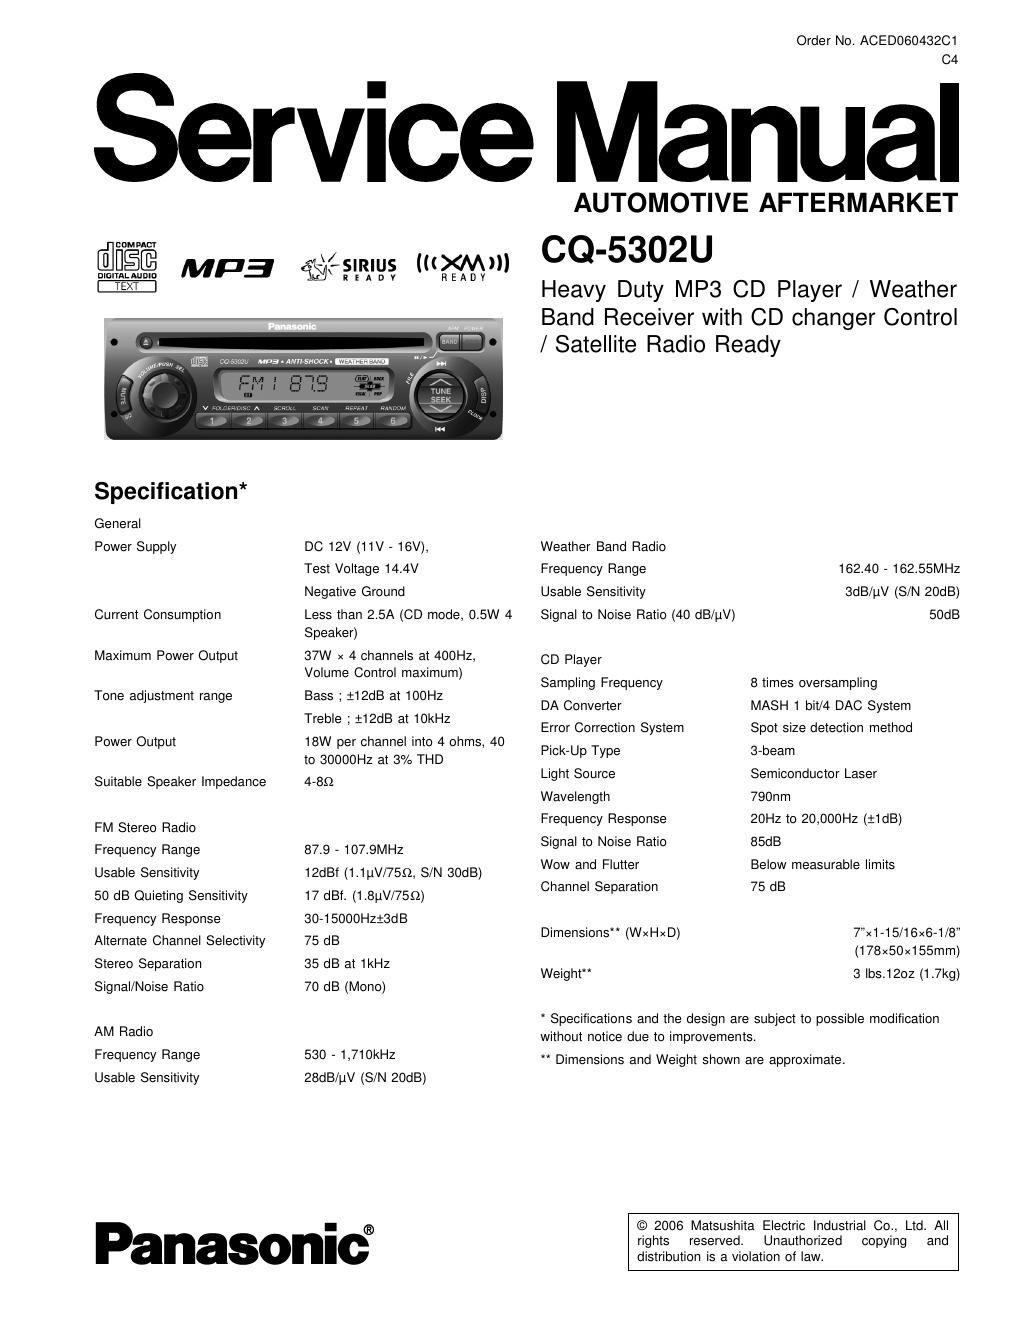 panasonic cq 5302 u service manual